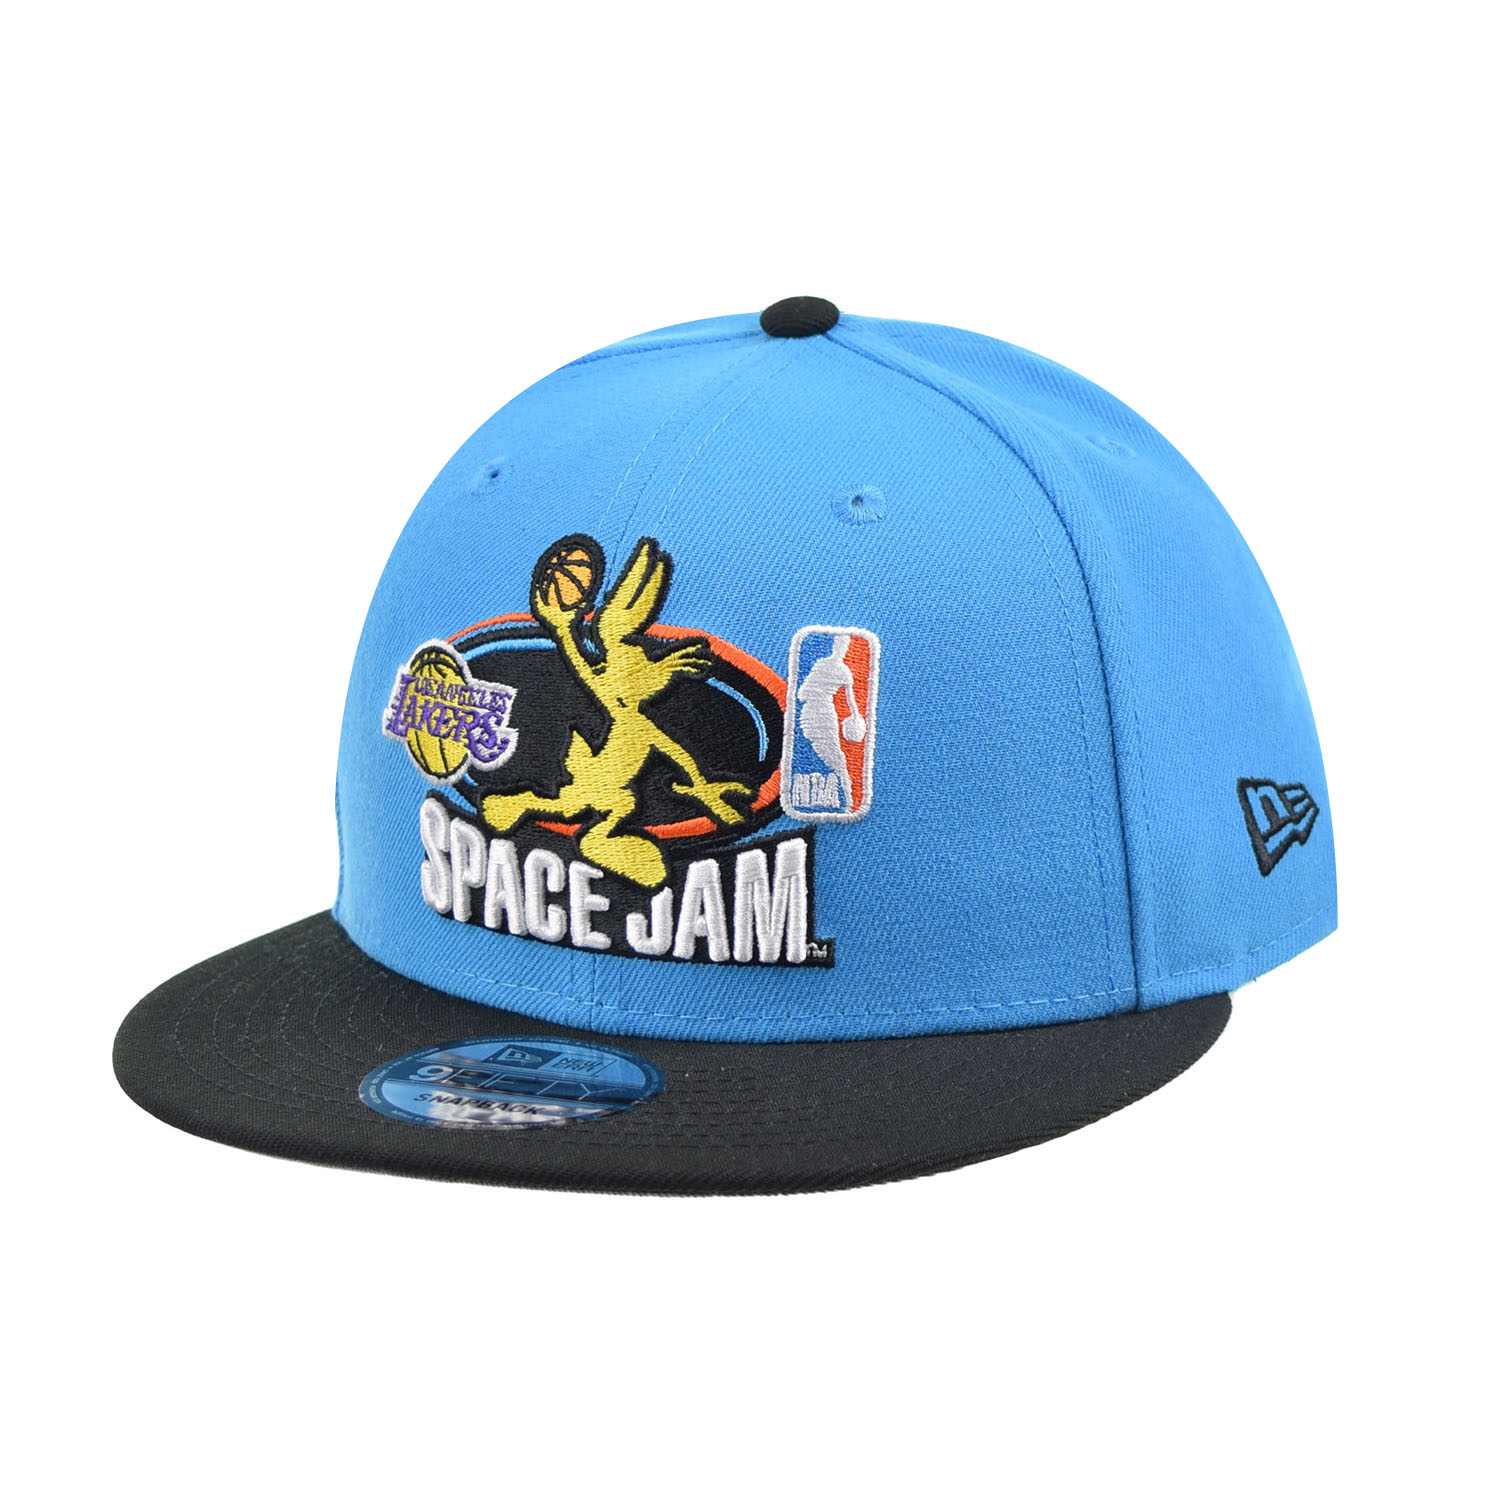 New Era LA Lakers "Space Jam 2-Bugs Bunny" 9Fifty Men's Snapback Hat Blue-Black 70642014